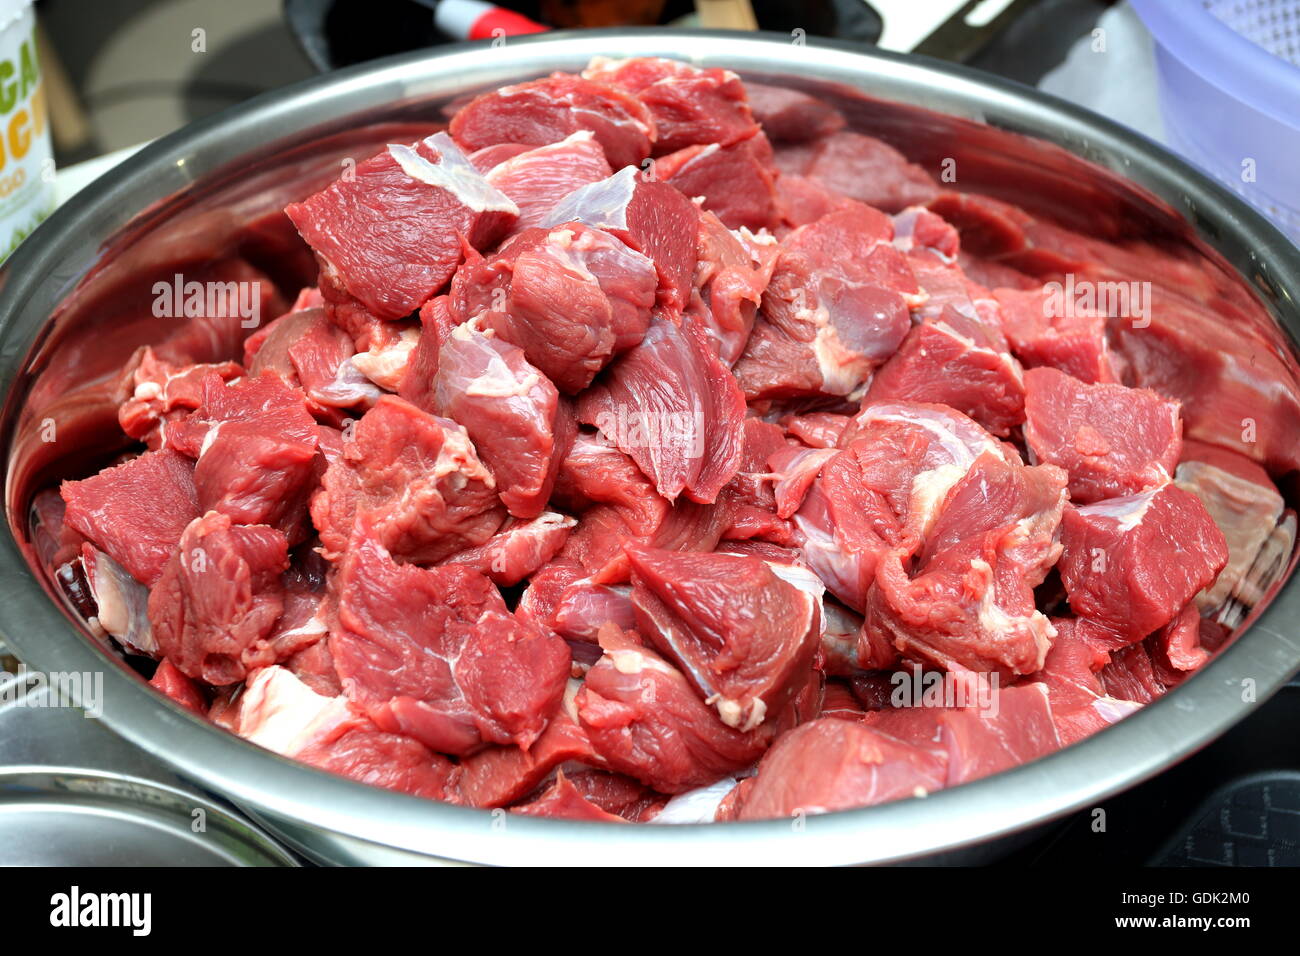 Freshly cut gravy beef in stainless steel bowl Stock Photo